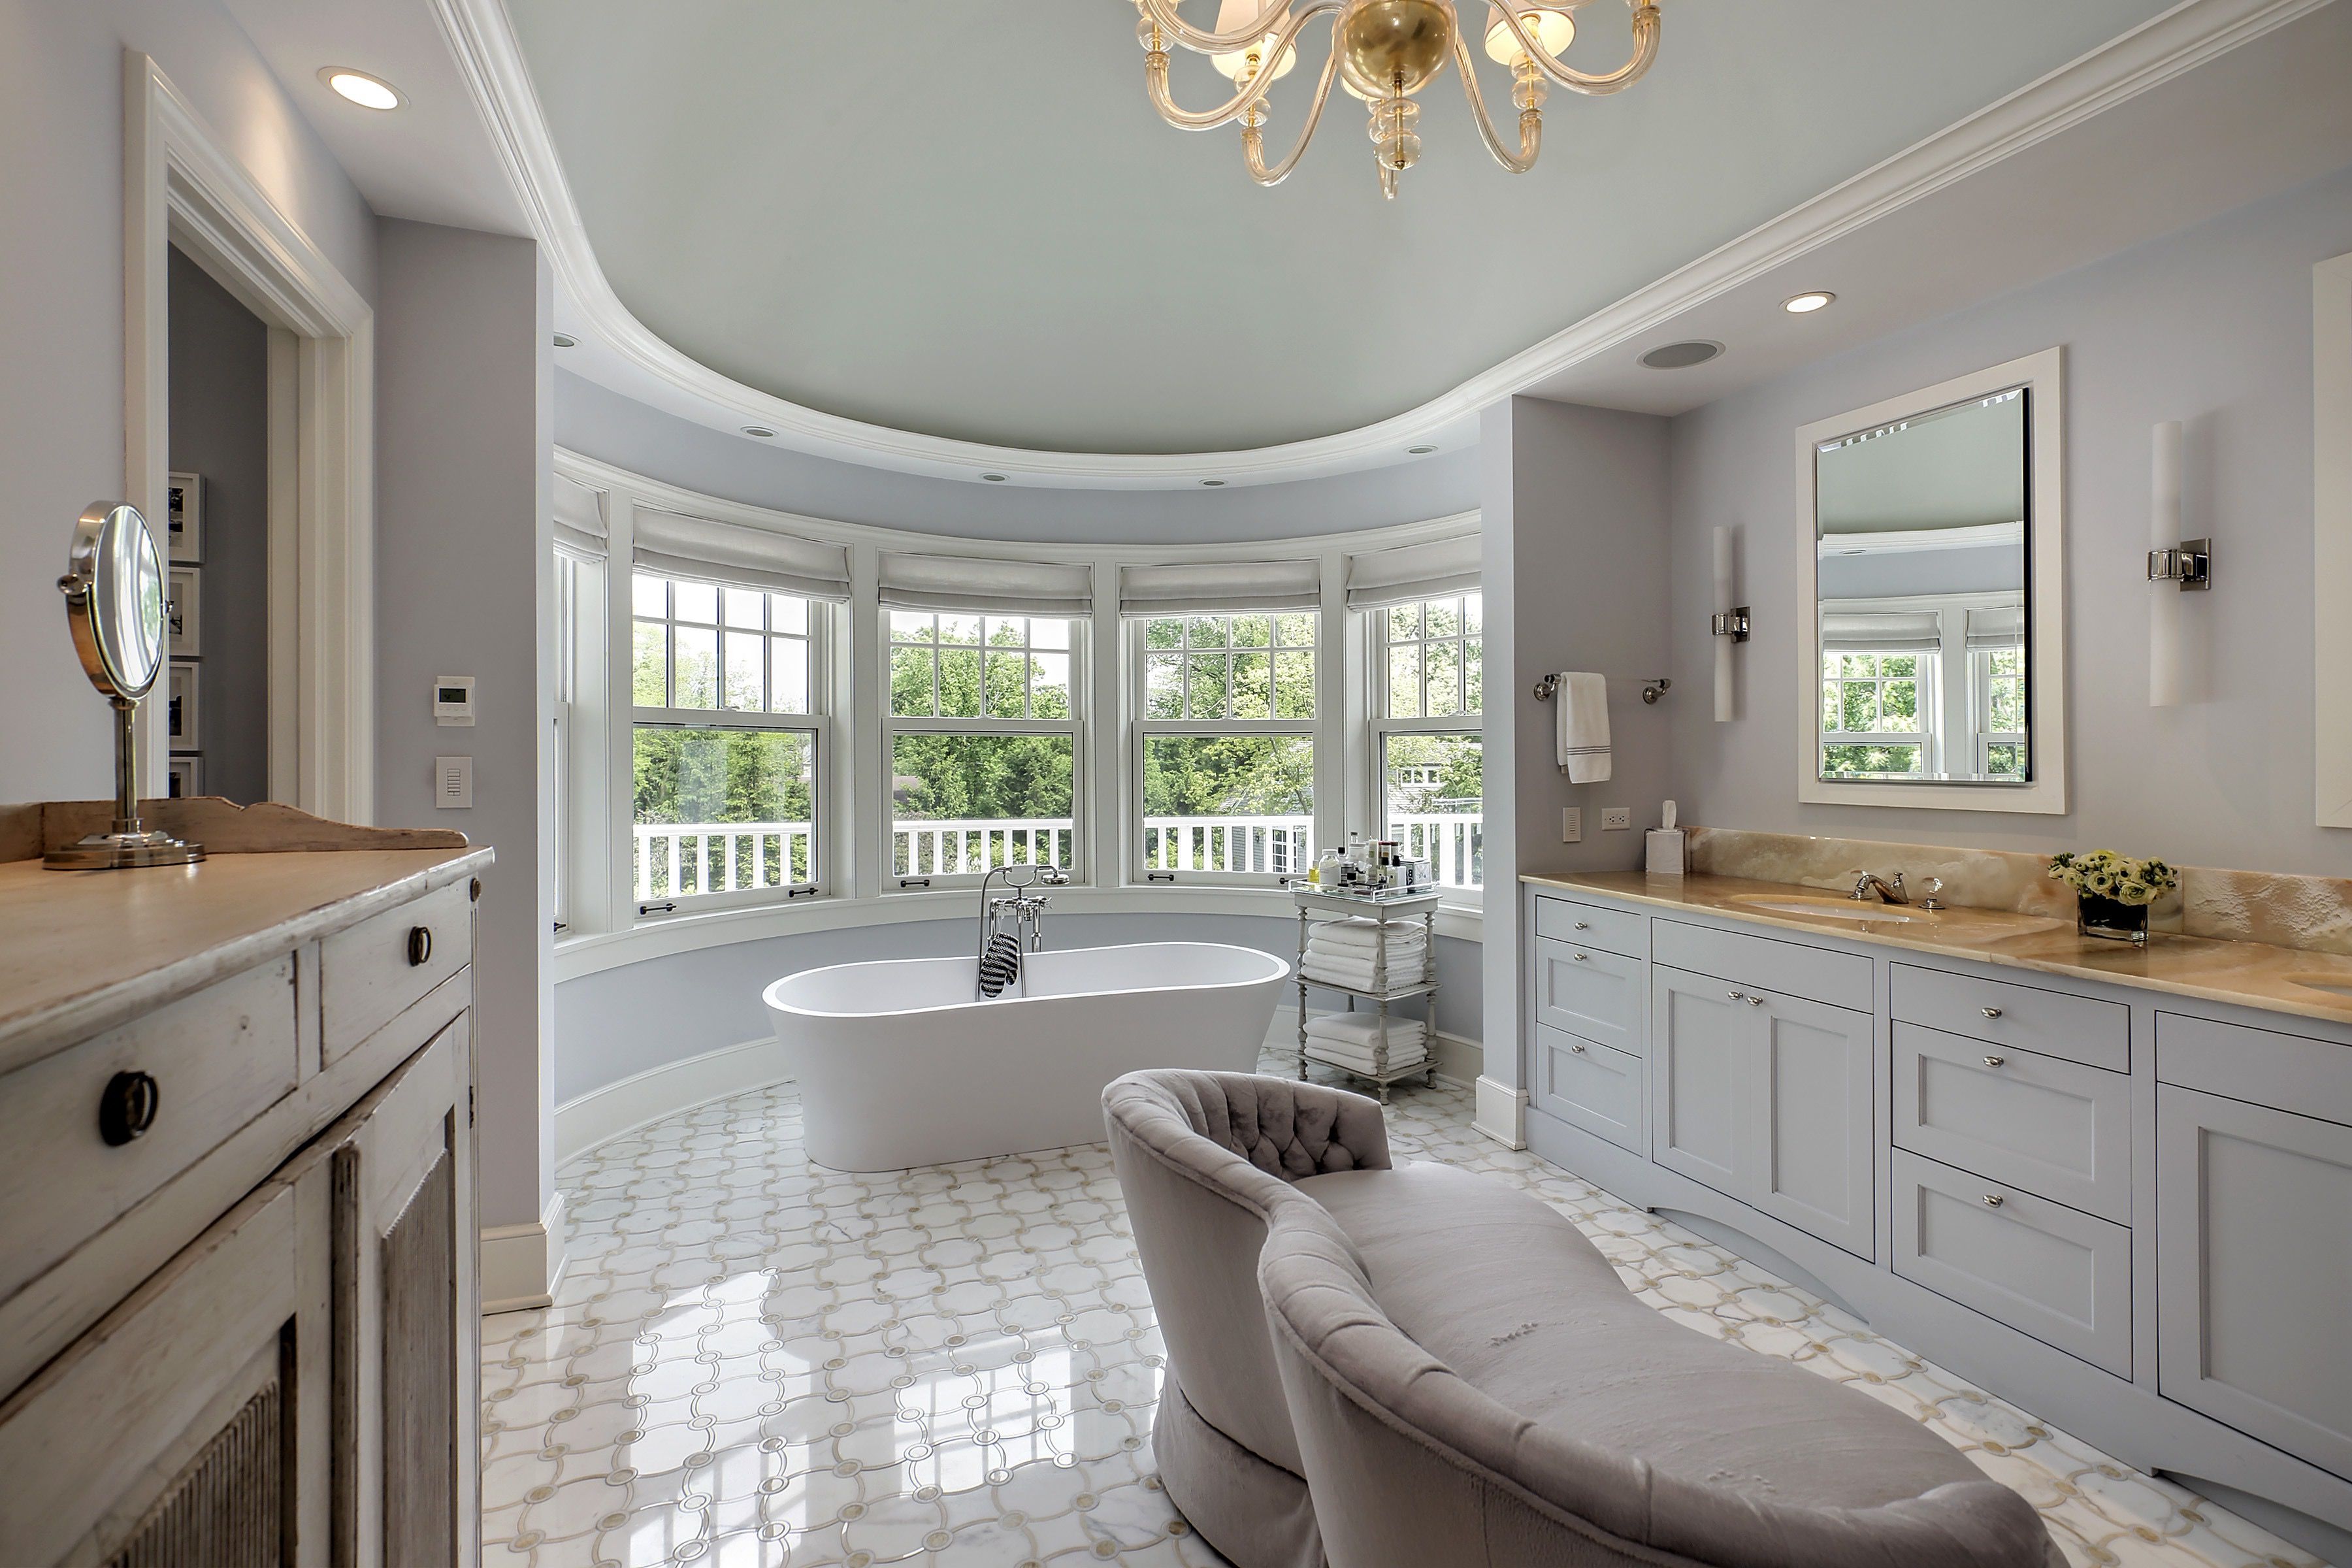 Elegant Bathroom Interior Design: A Refreshing Sanctuary Of Relaxation